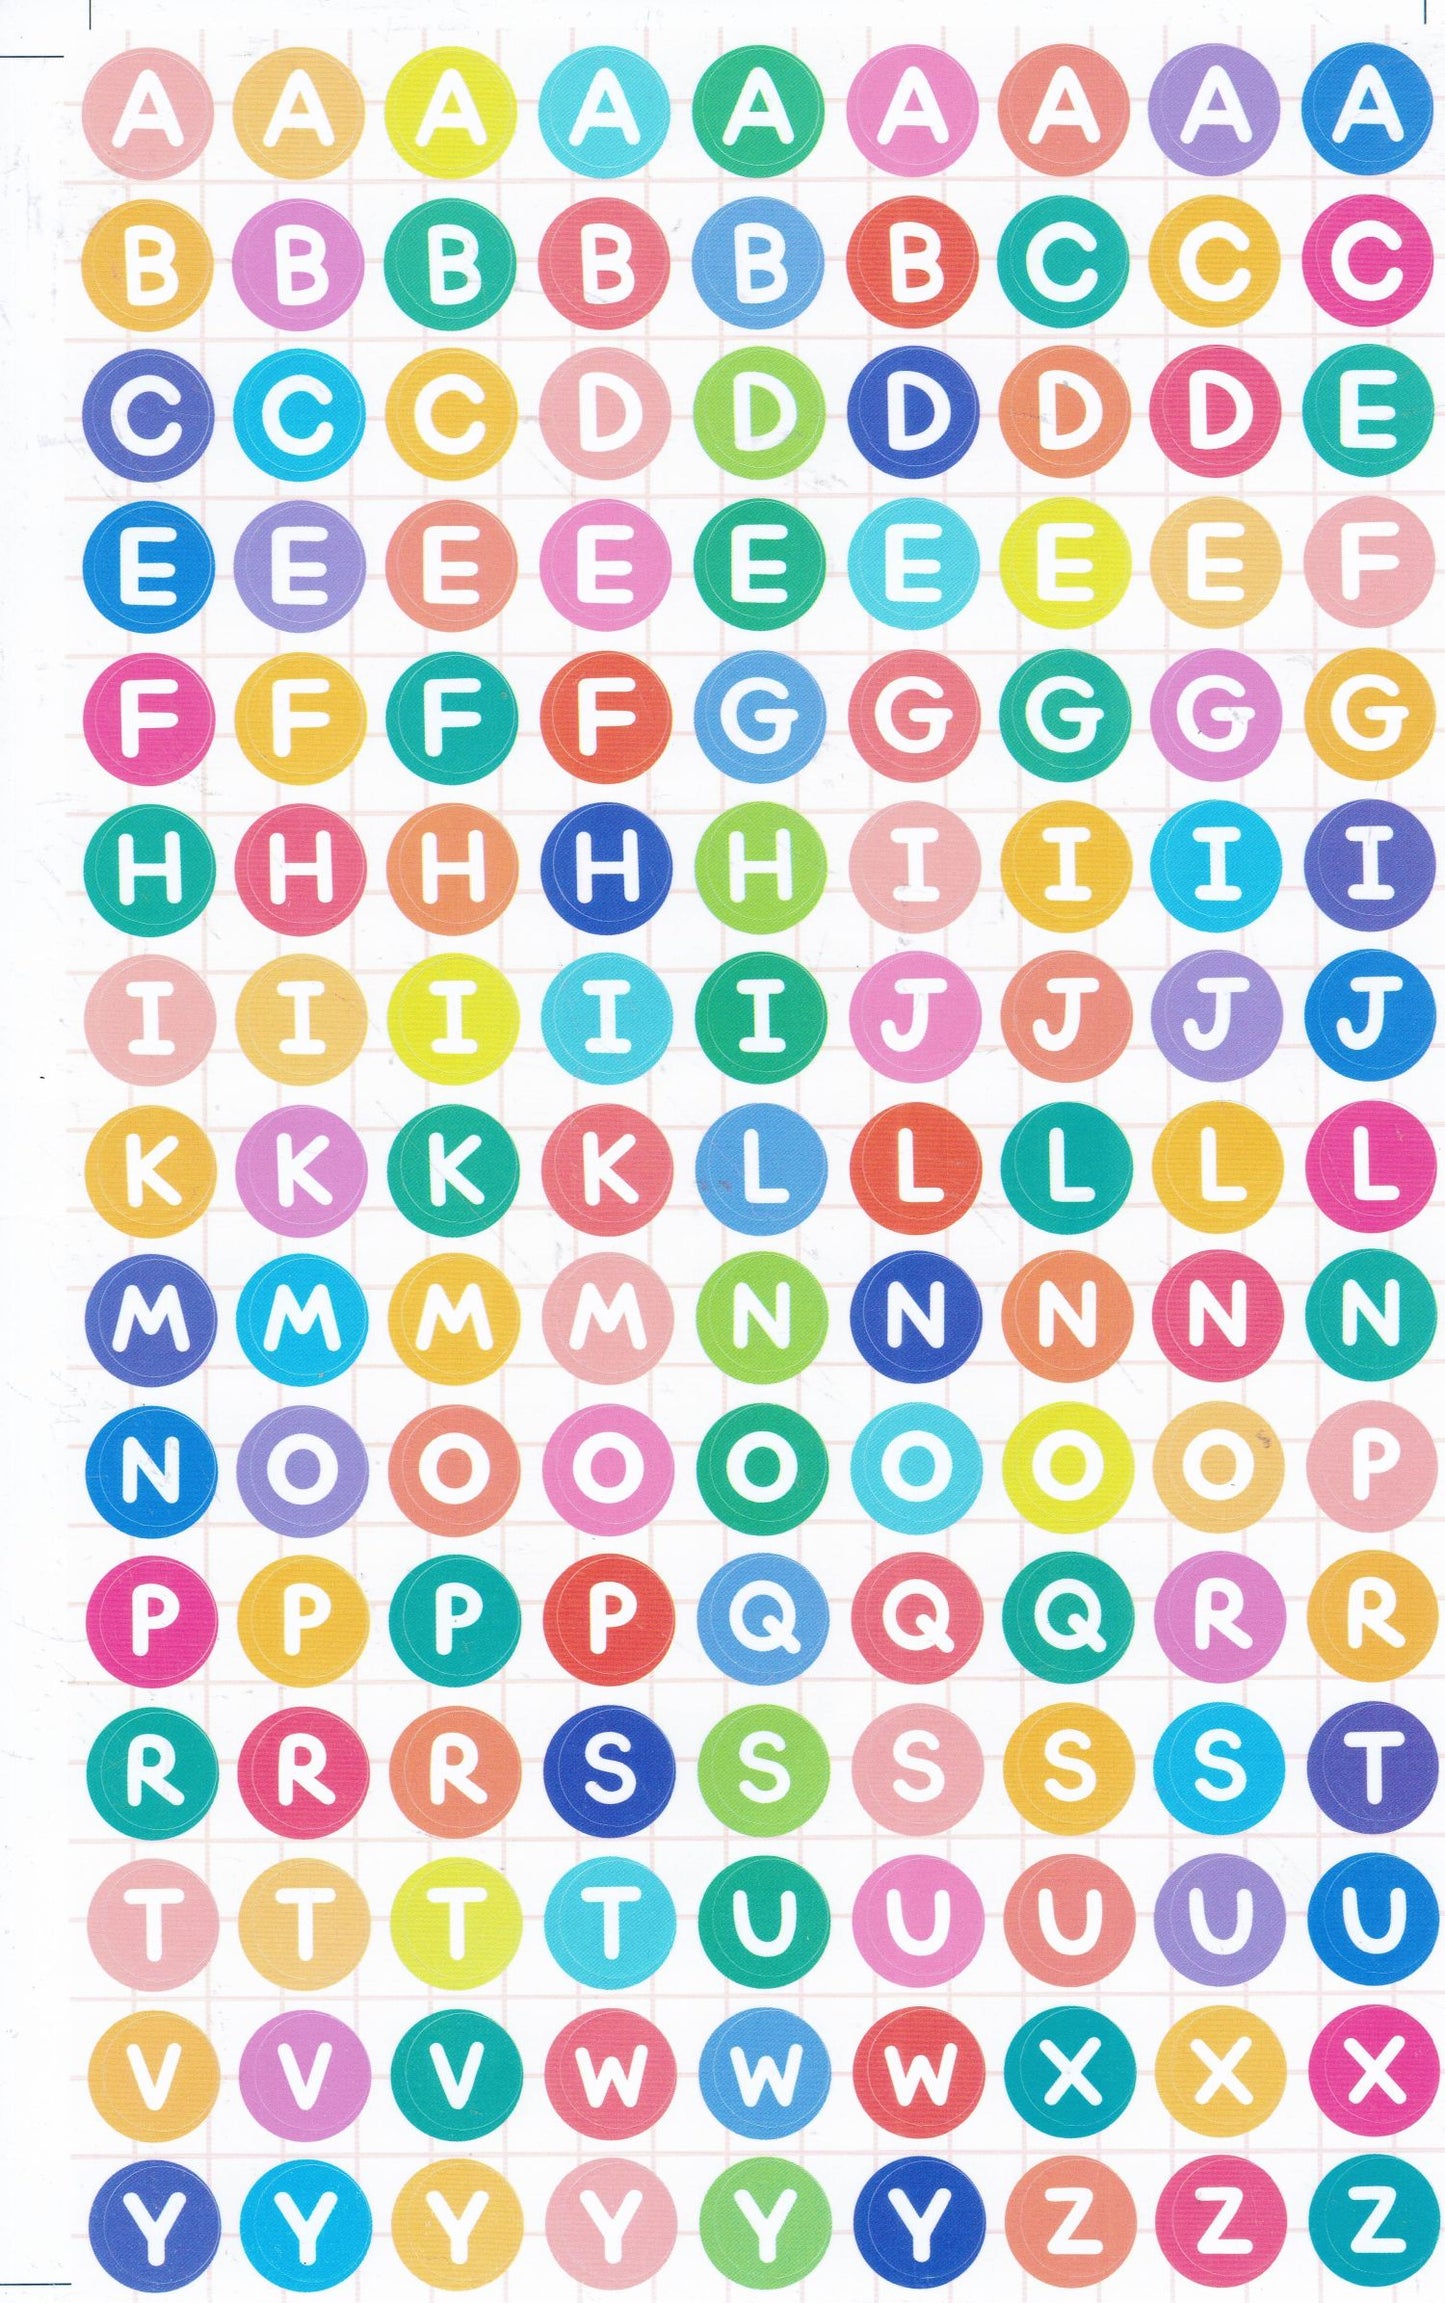 Letters ABC 13 mm high sticker for office folders children crafts kindergarten birthday 1 sheet 371